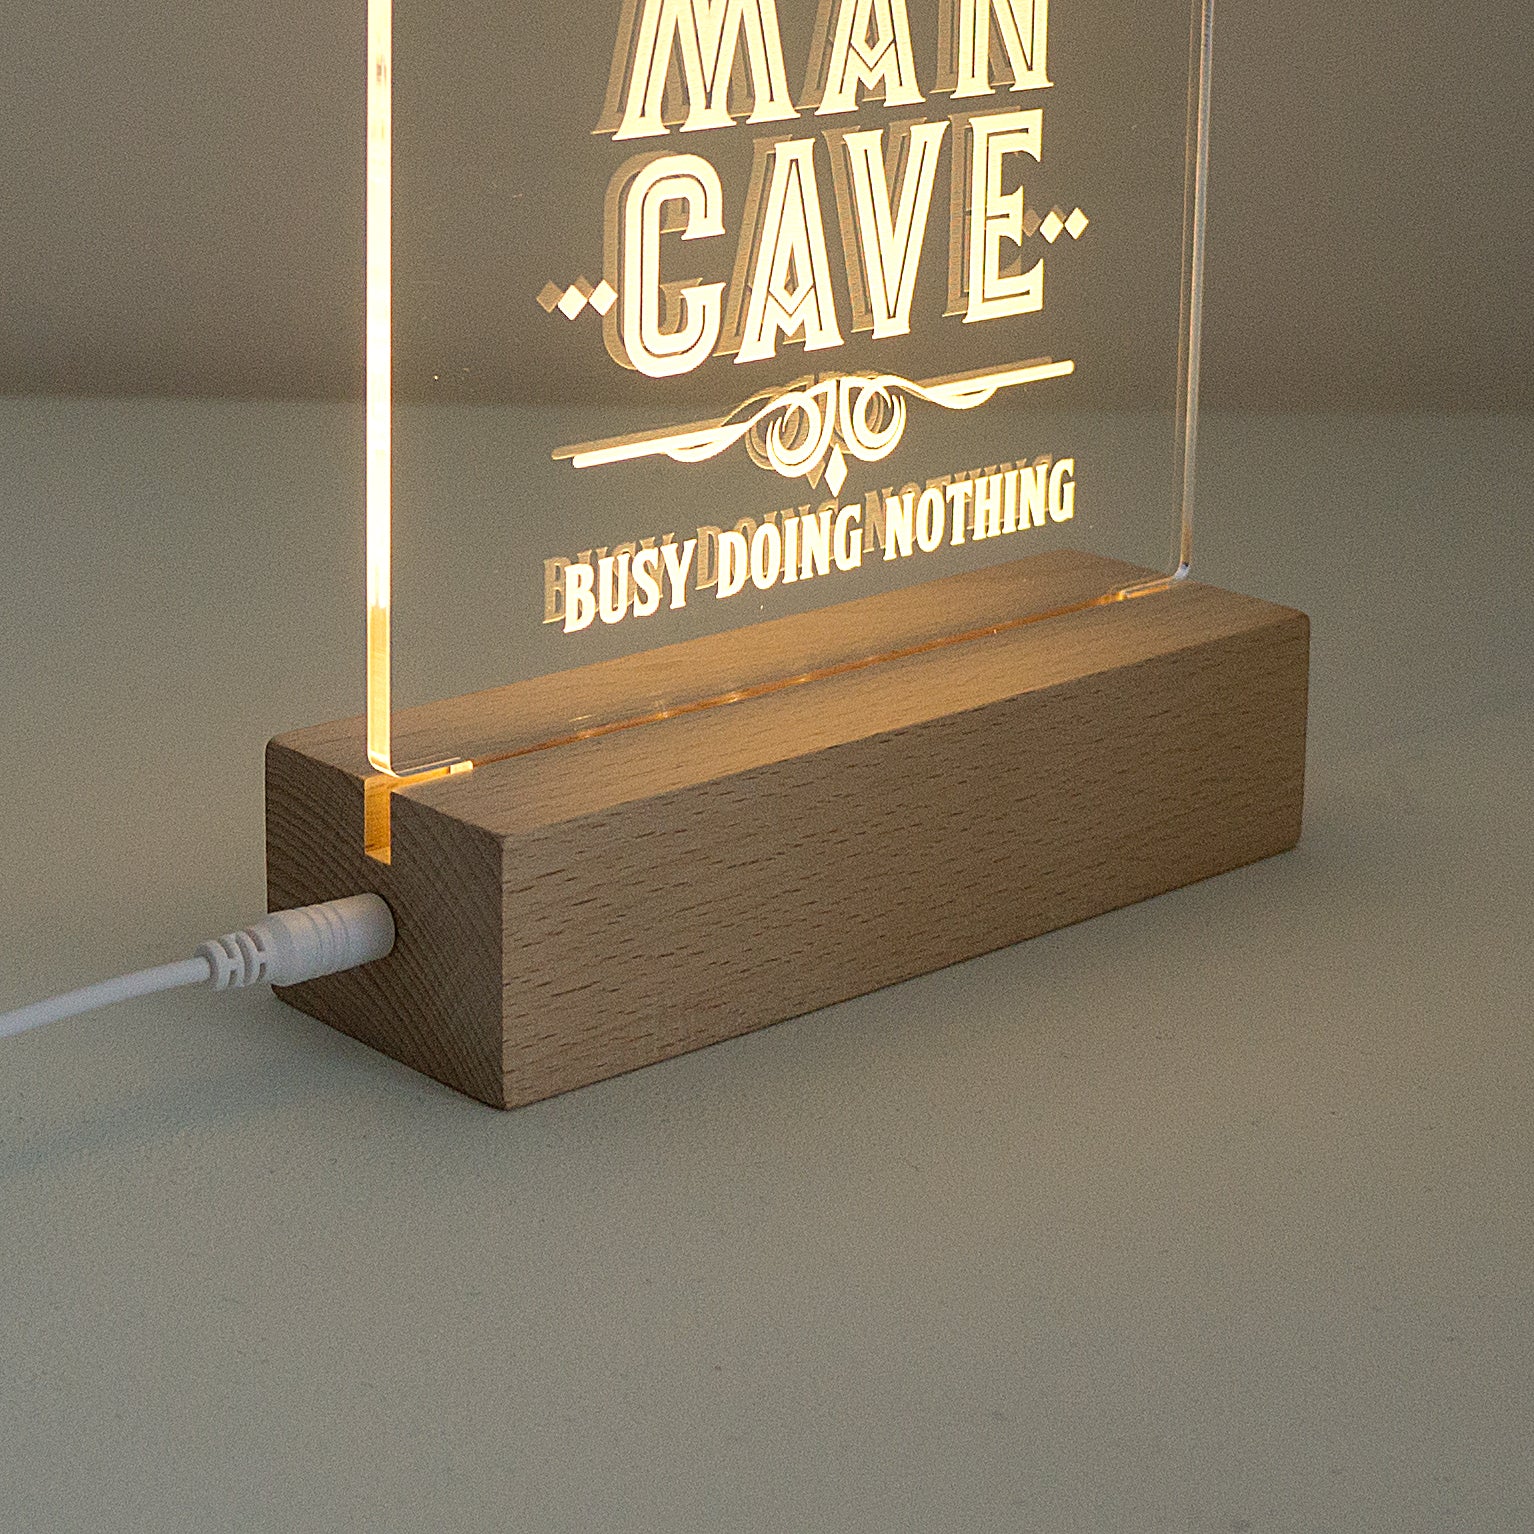 Man cave LED sign